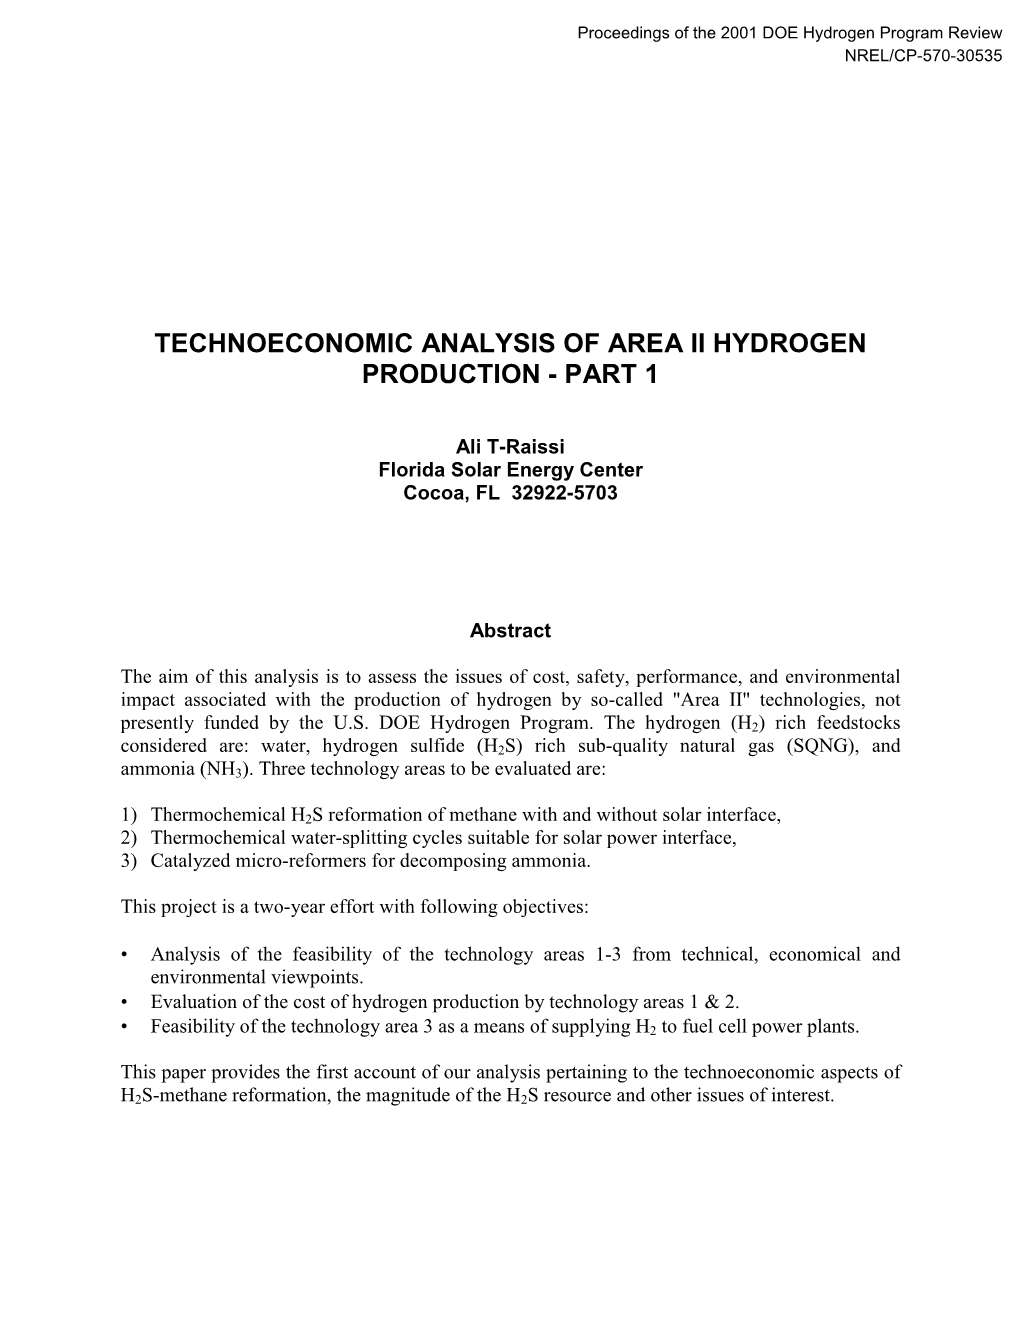 Technoeconomic Analysis of Area Ii Hydrogen Production - Part 1